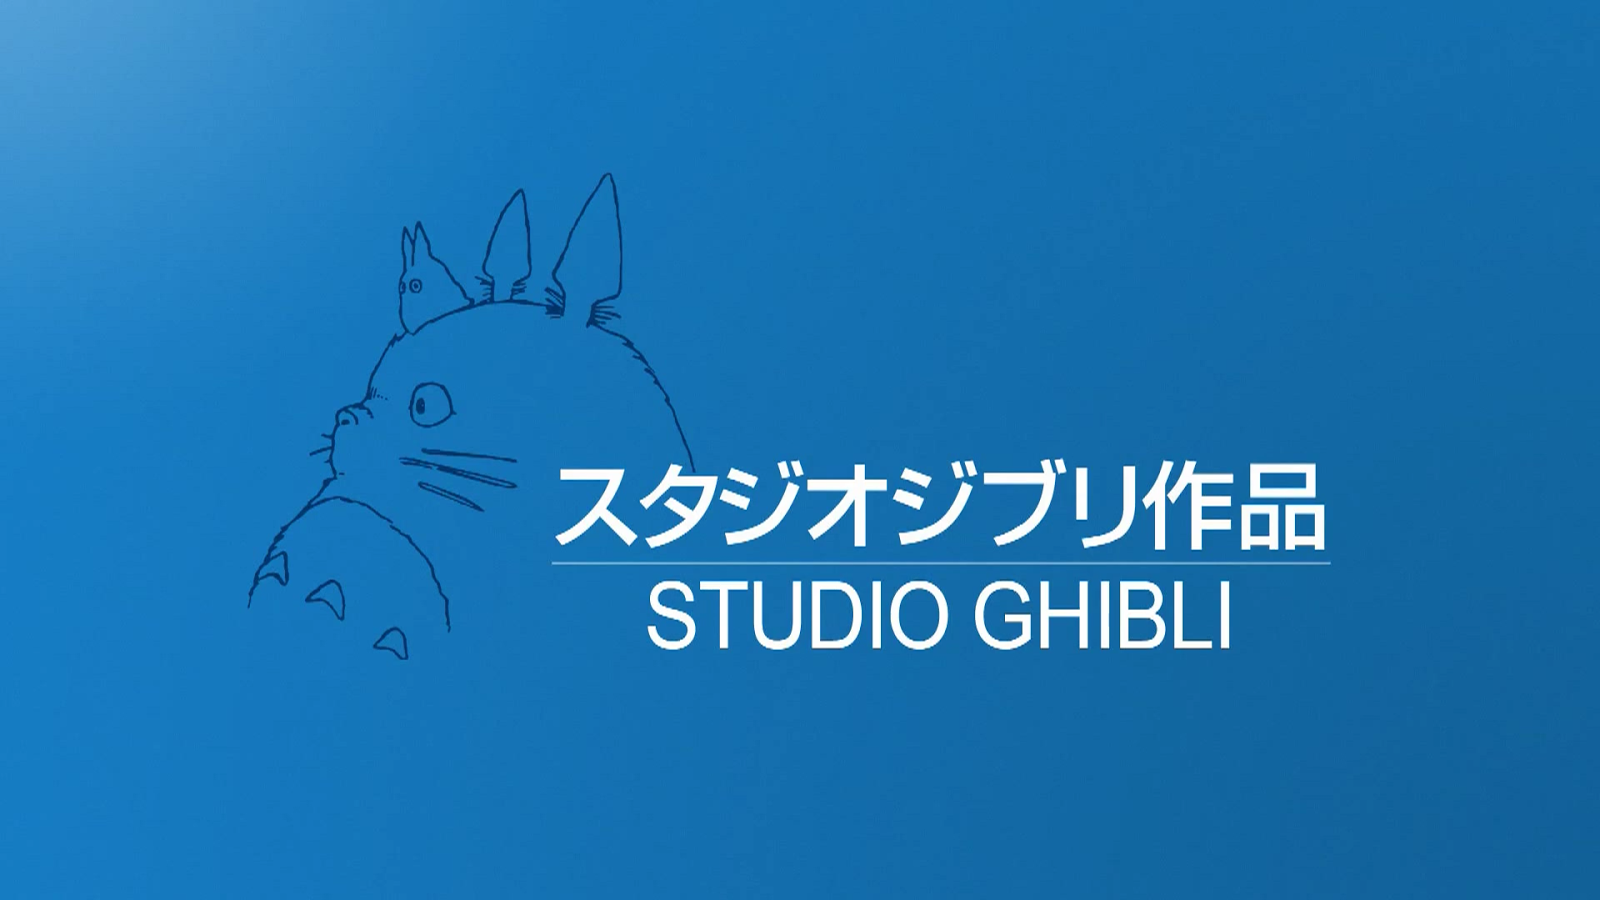 Studio Ghibli Background Wallpaper